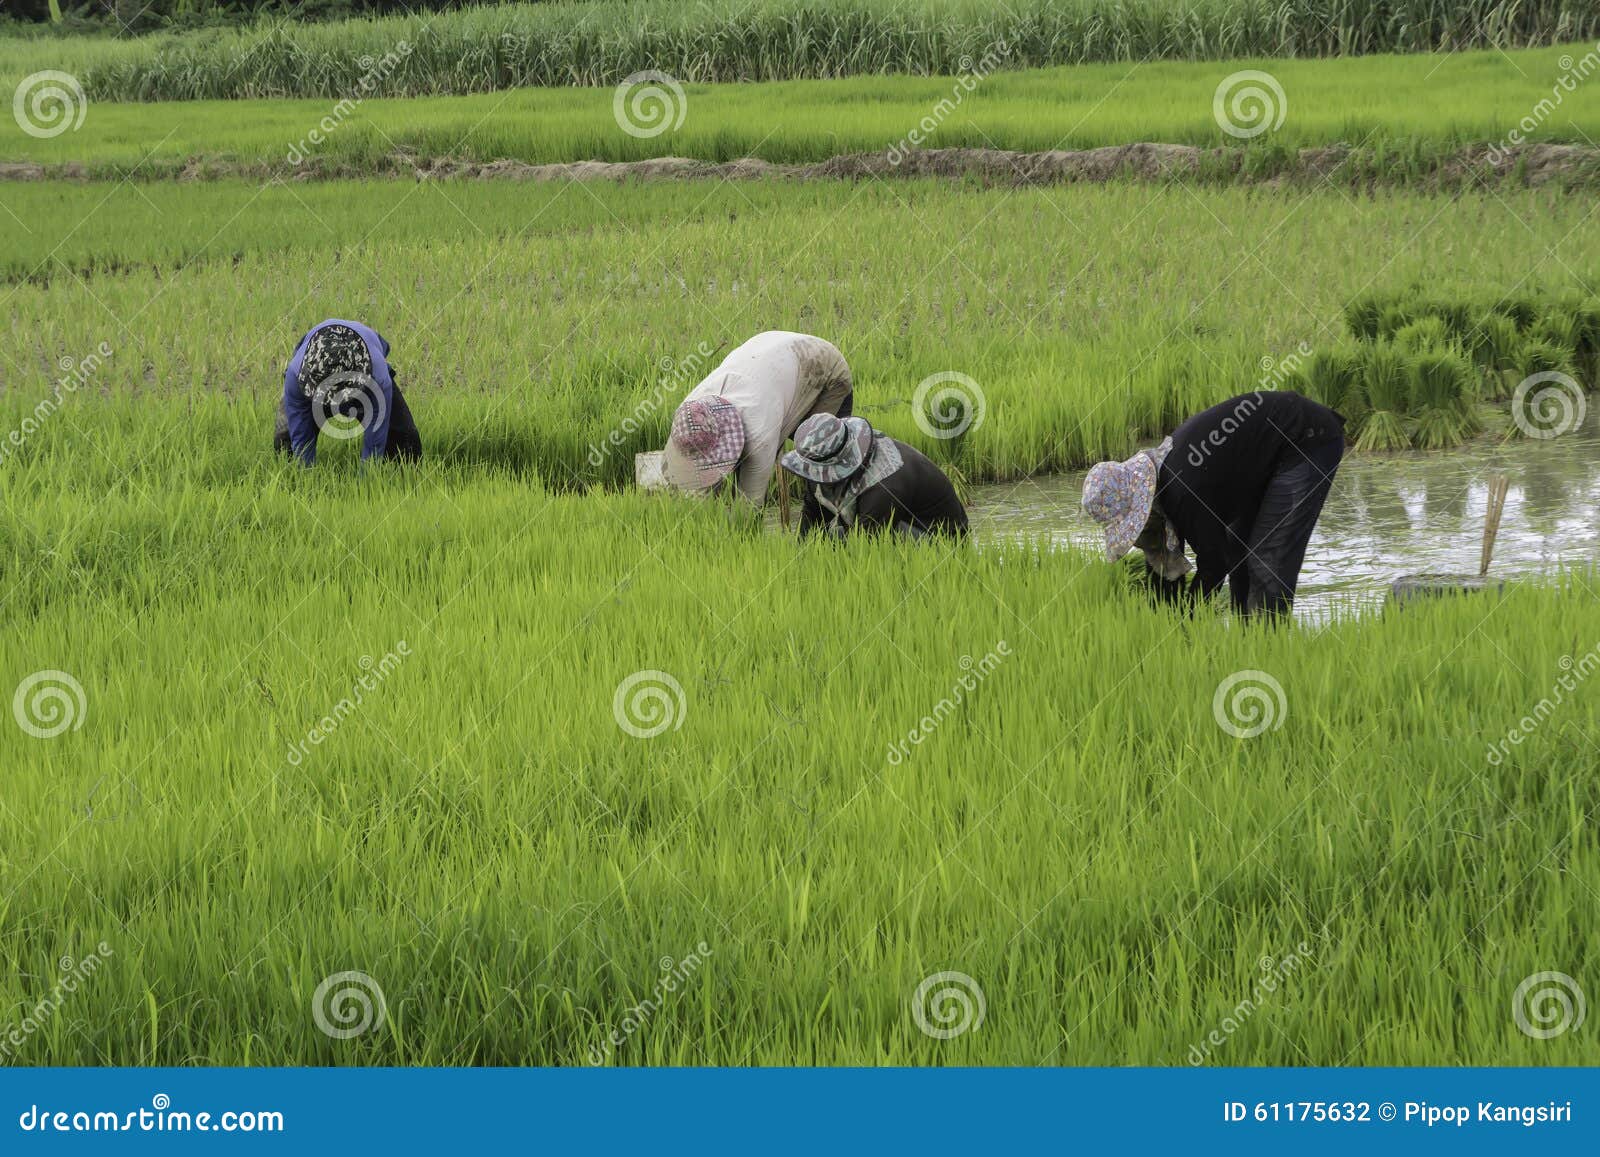 Rice farmer photography